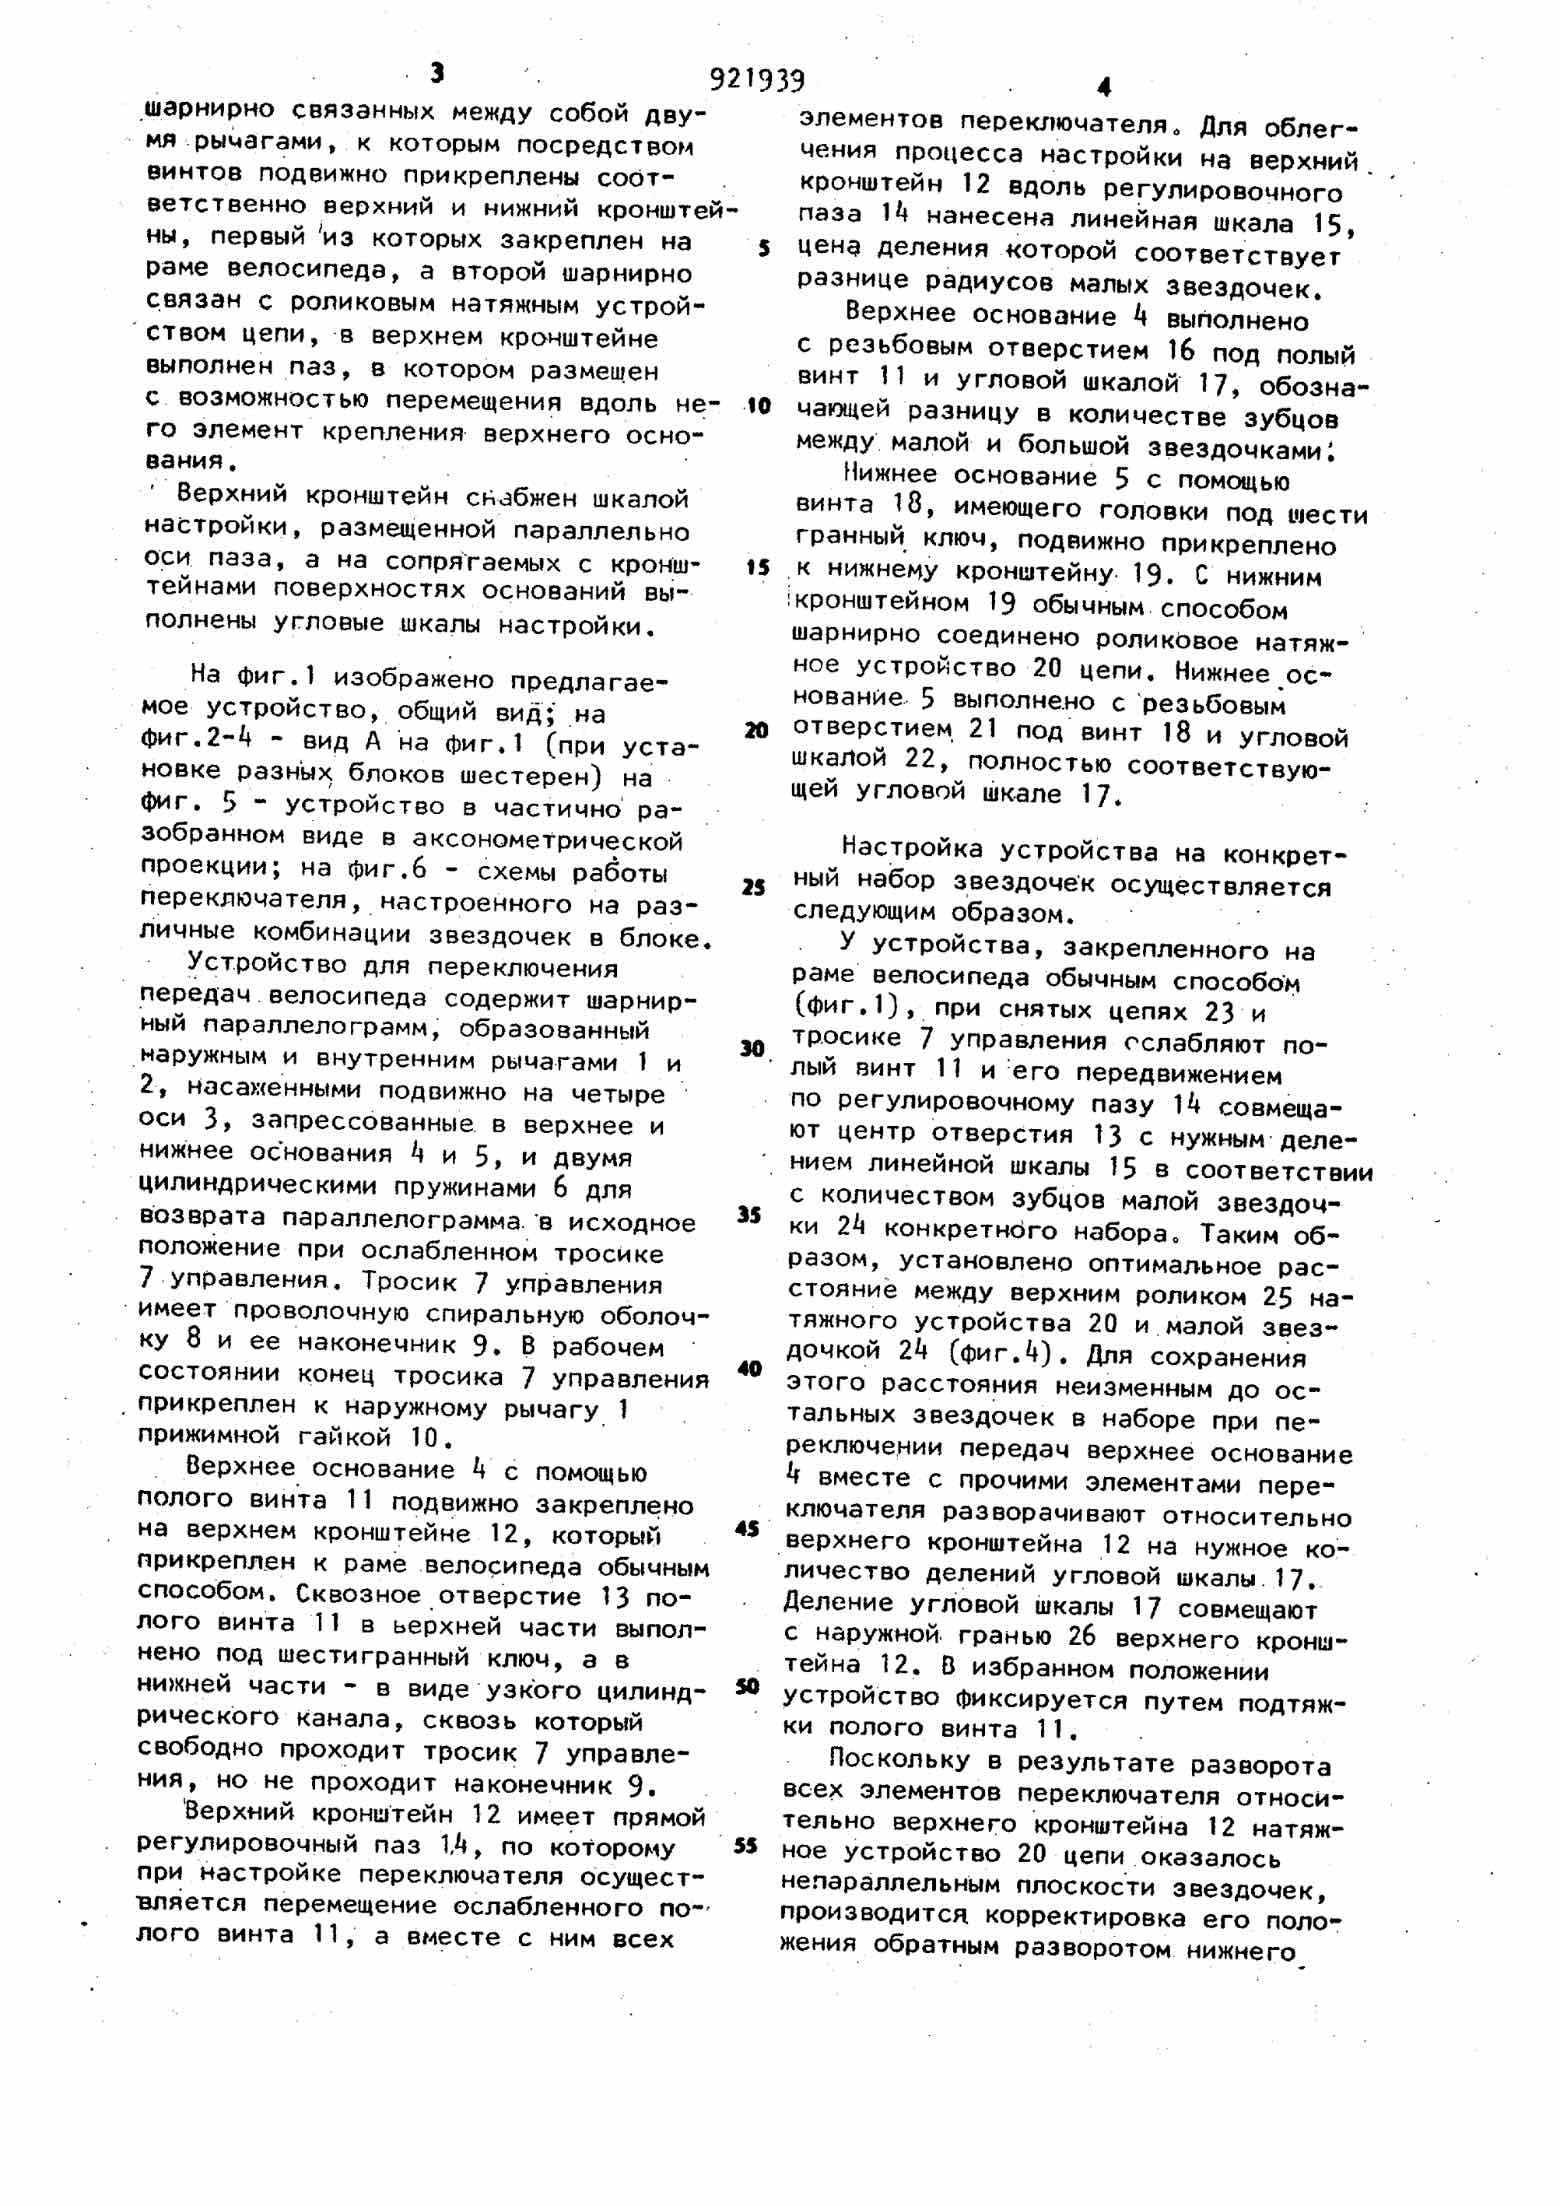 USSR Patent 921,939 - unknown derailleur scan 2 main image